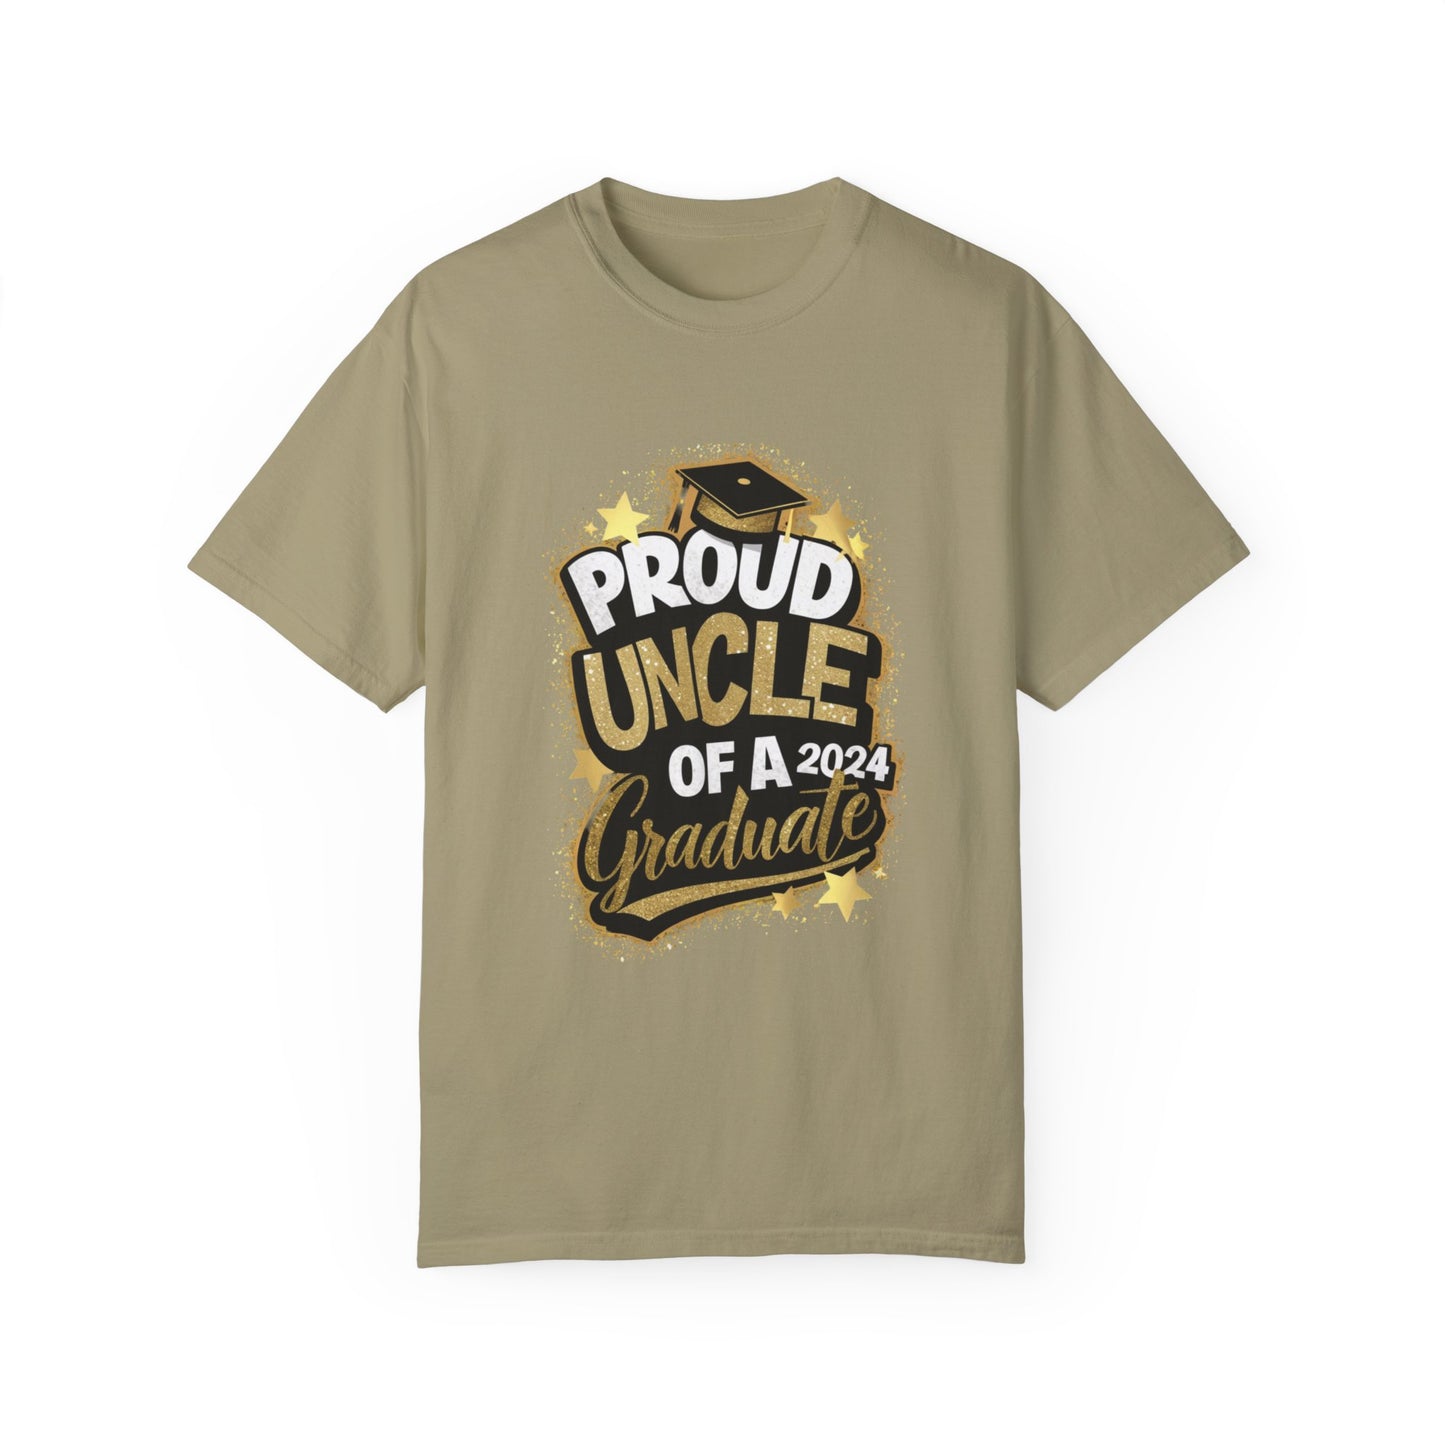 Proud Uncle of a 2024 Graduate Unisex Garment-dyed T-shirt Cotton Funny Humorous Graphic Soft Premium Unisex Men Women Khaki T-shirt Birthday Gift-11